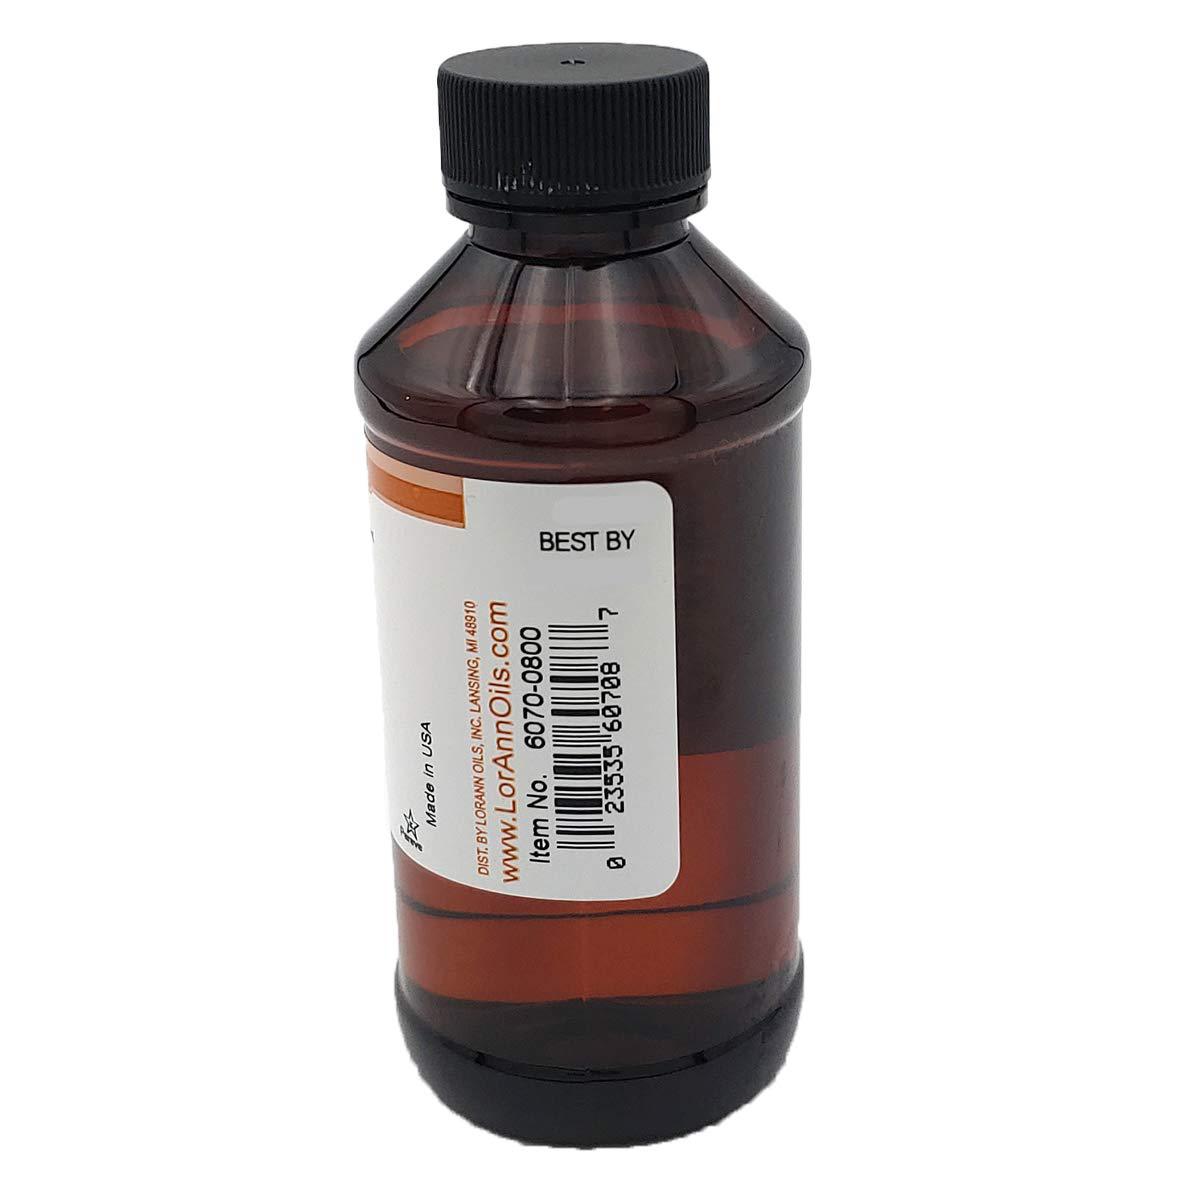 Lorann Oils lorann mold inhibitor (4 oz, clear)